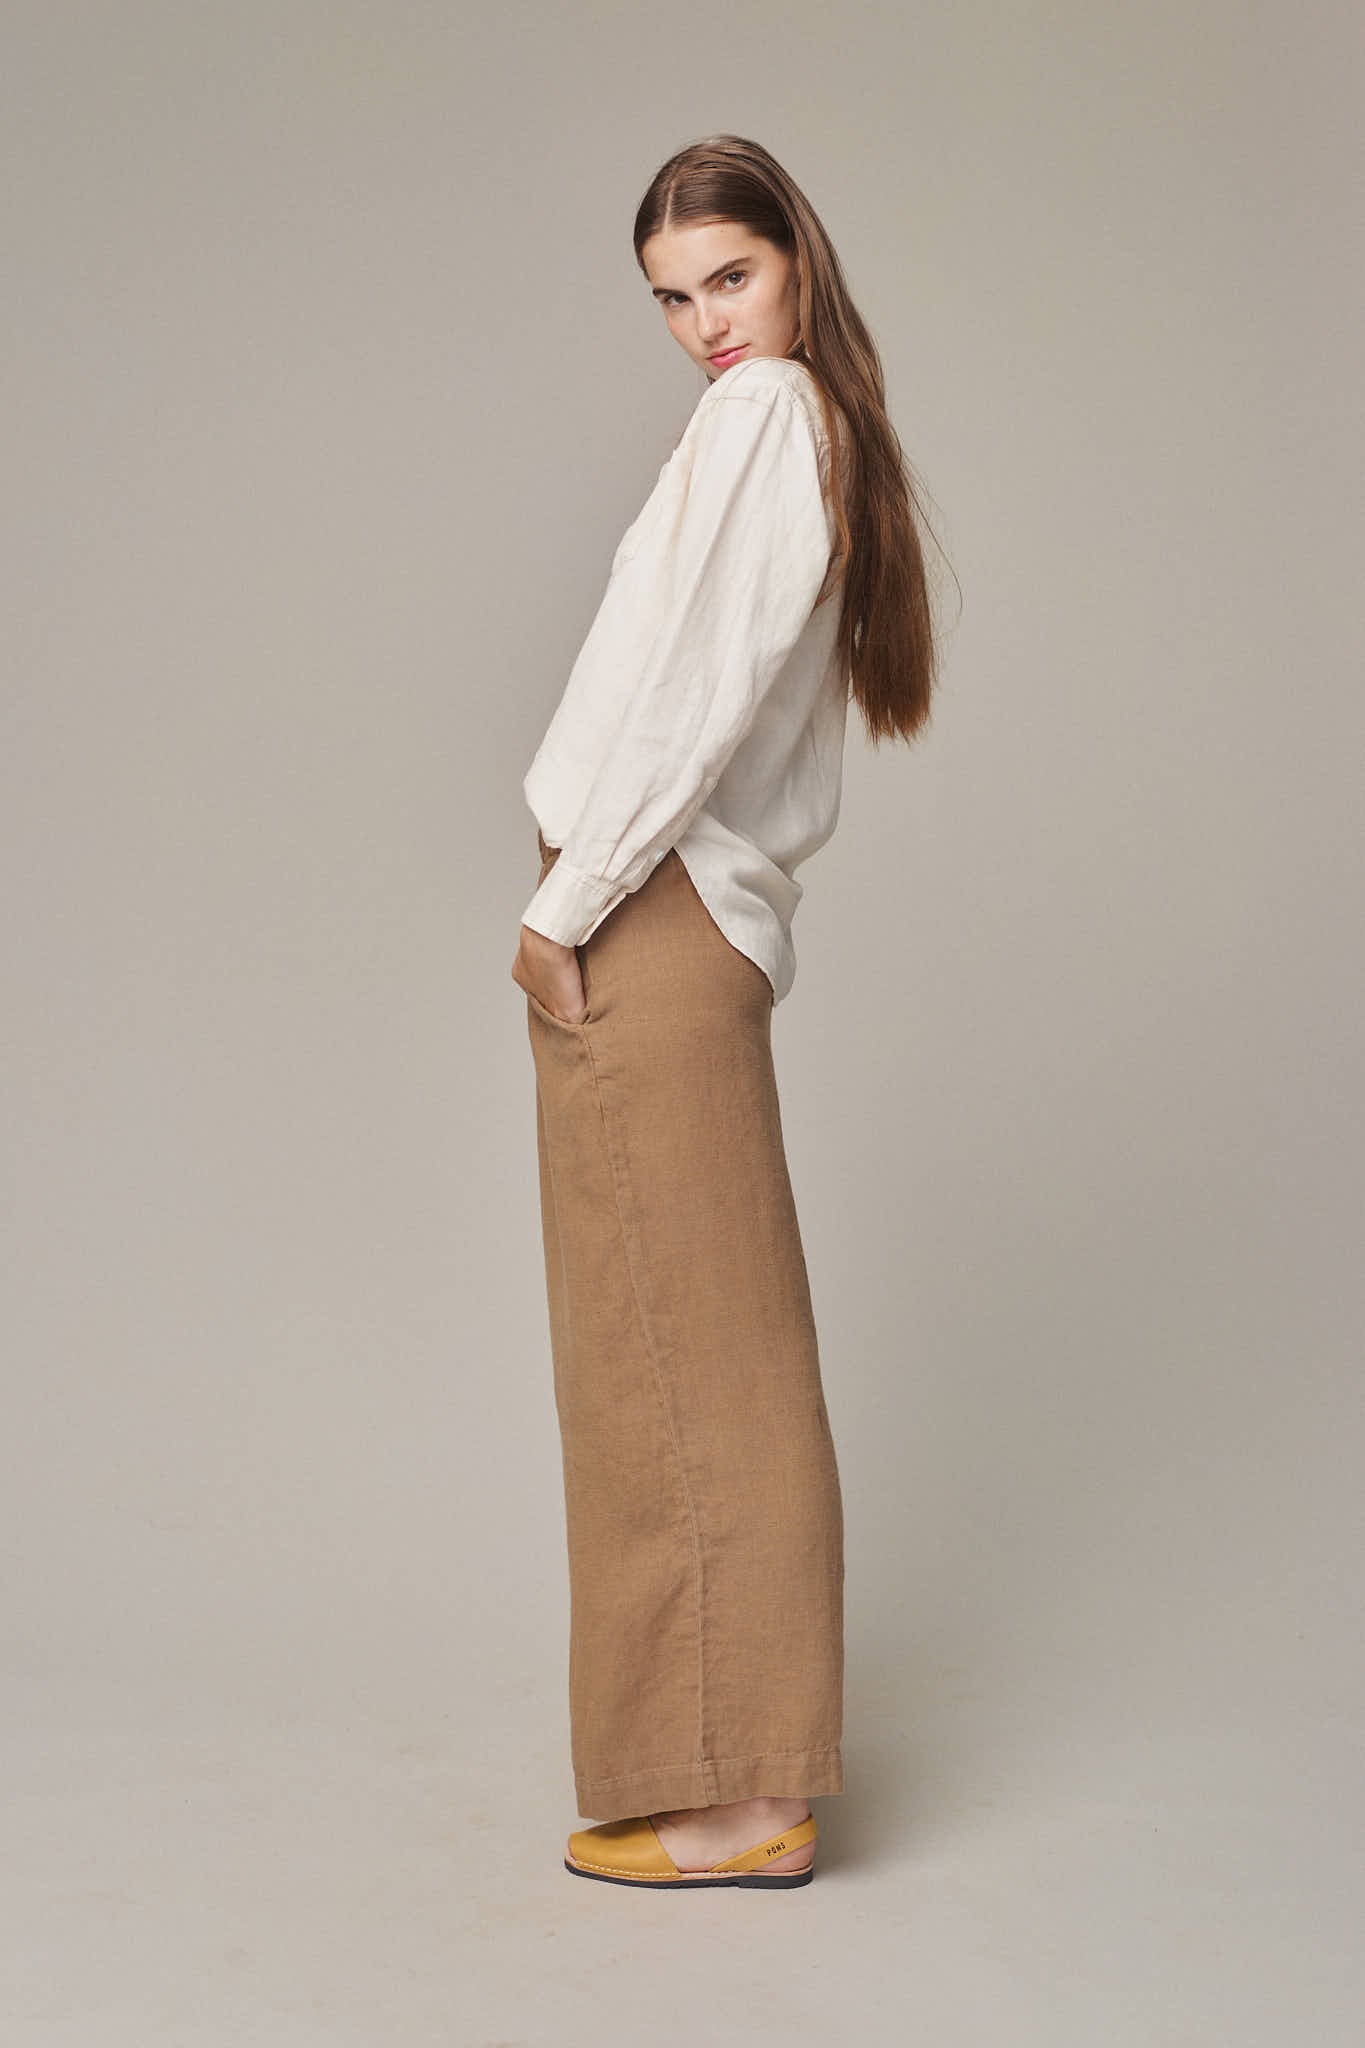 Cambria Pant | Jungmaven Hemp Clothing & Accessories / model_desc: Gwen is 5'11” wearing S